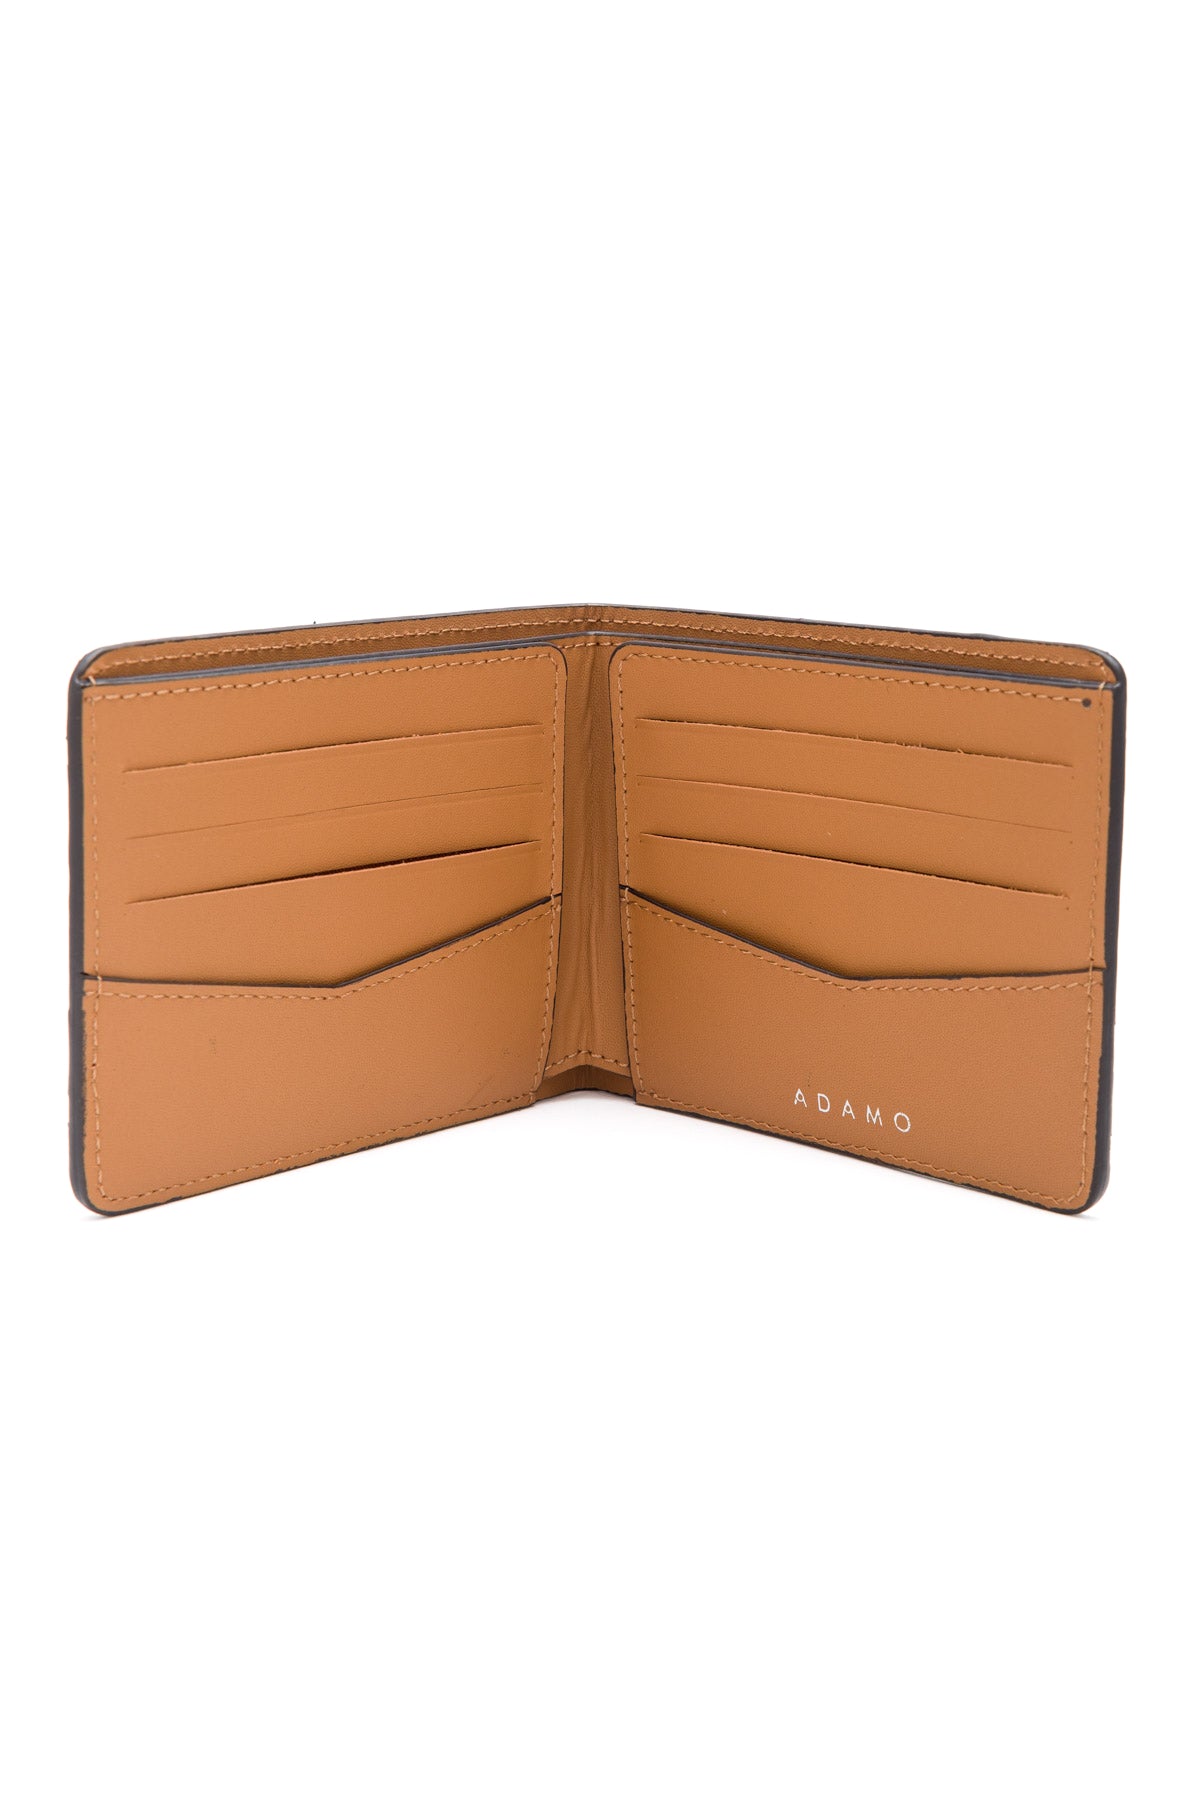 Orange Python Leather Wallet